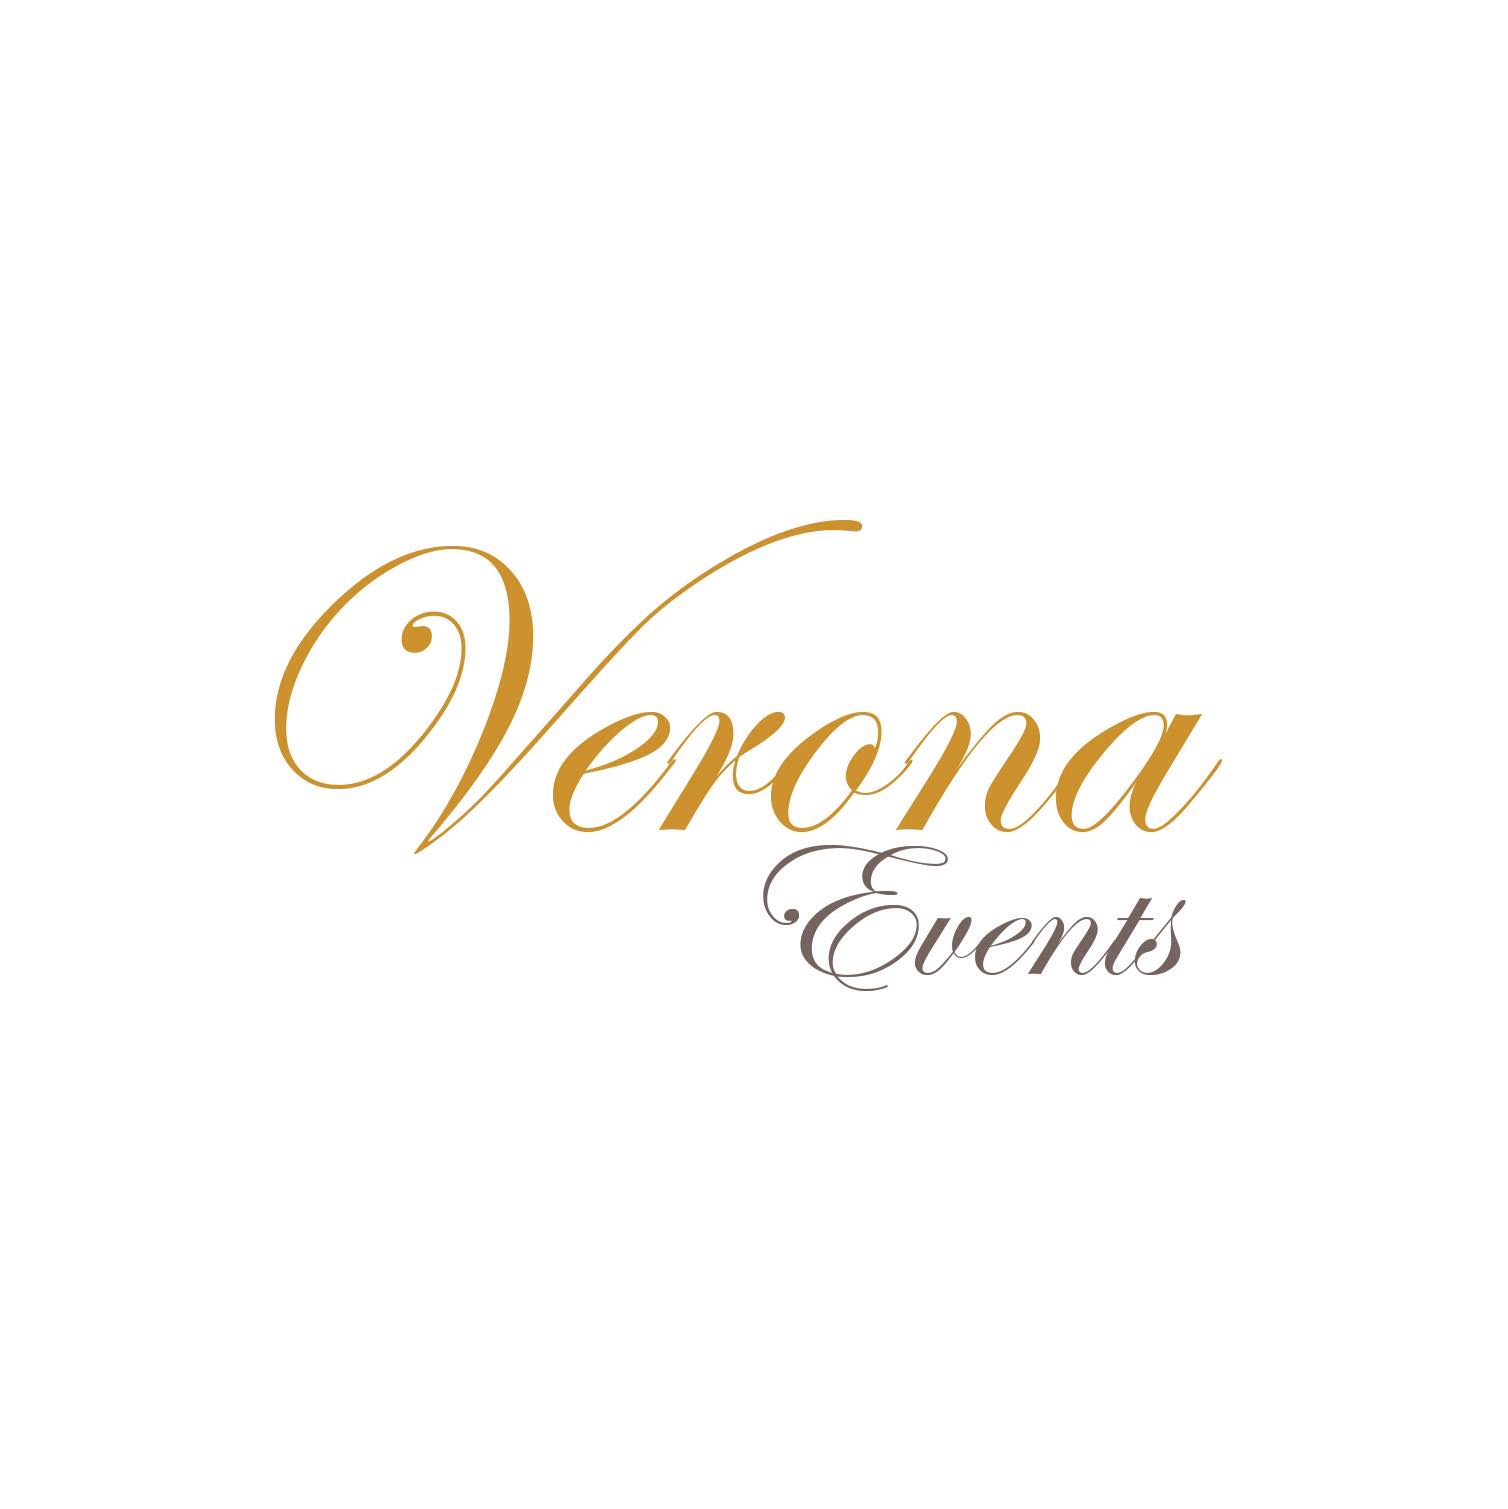 Verona Events